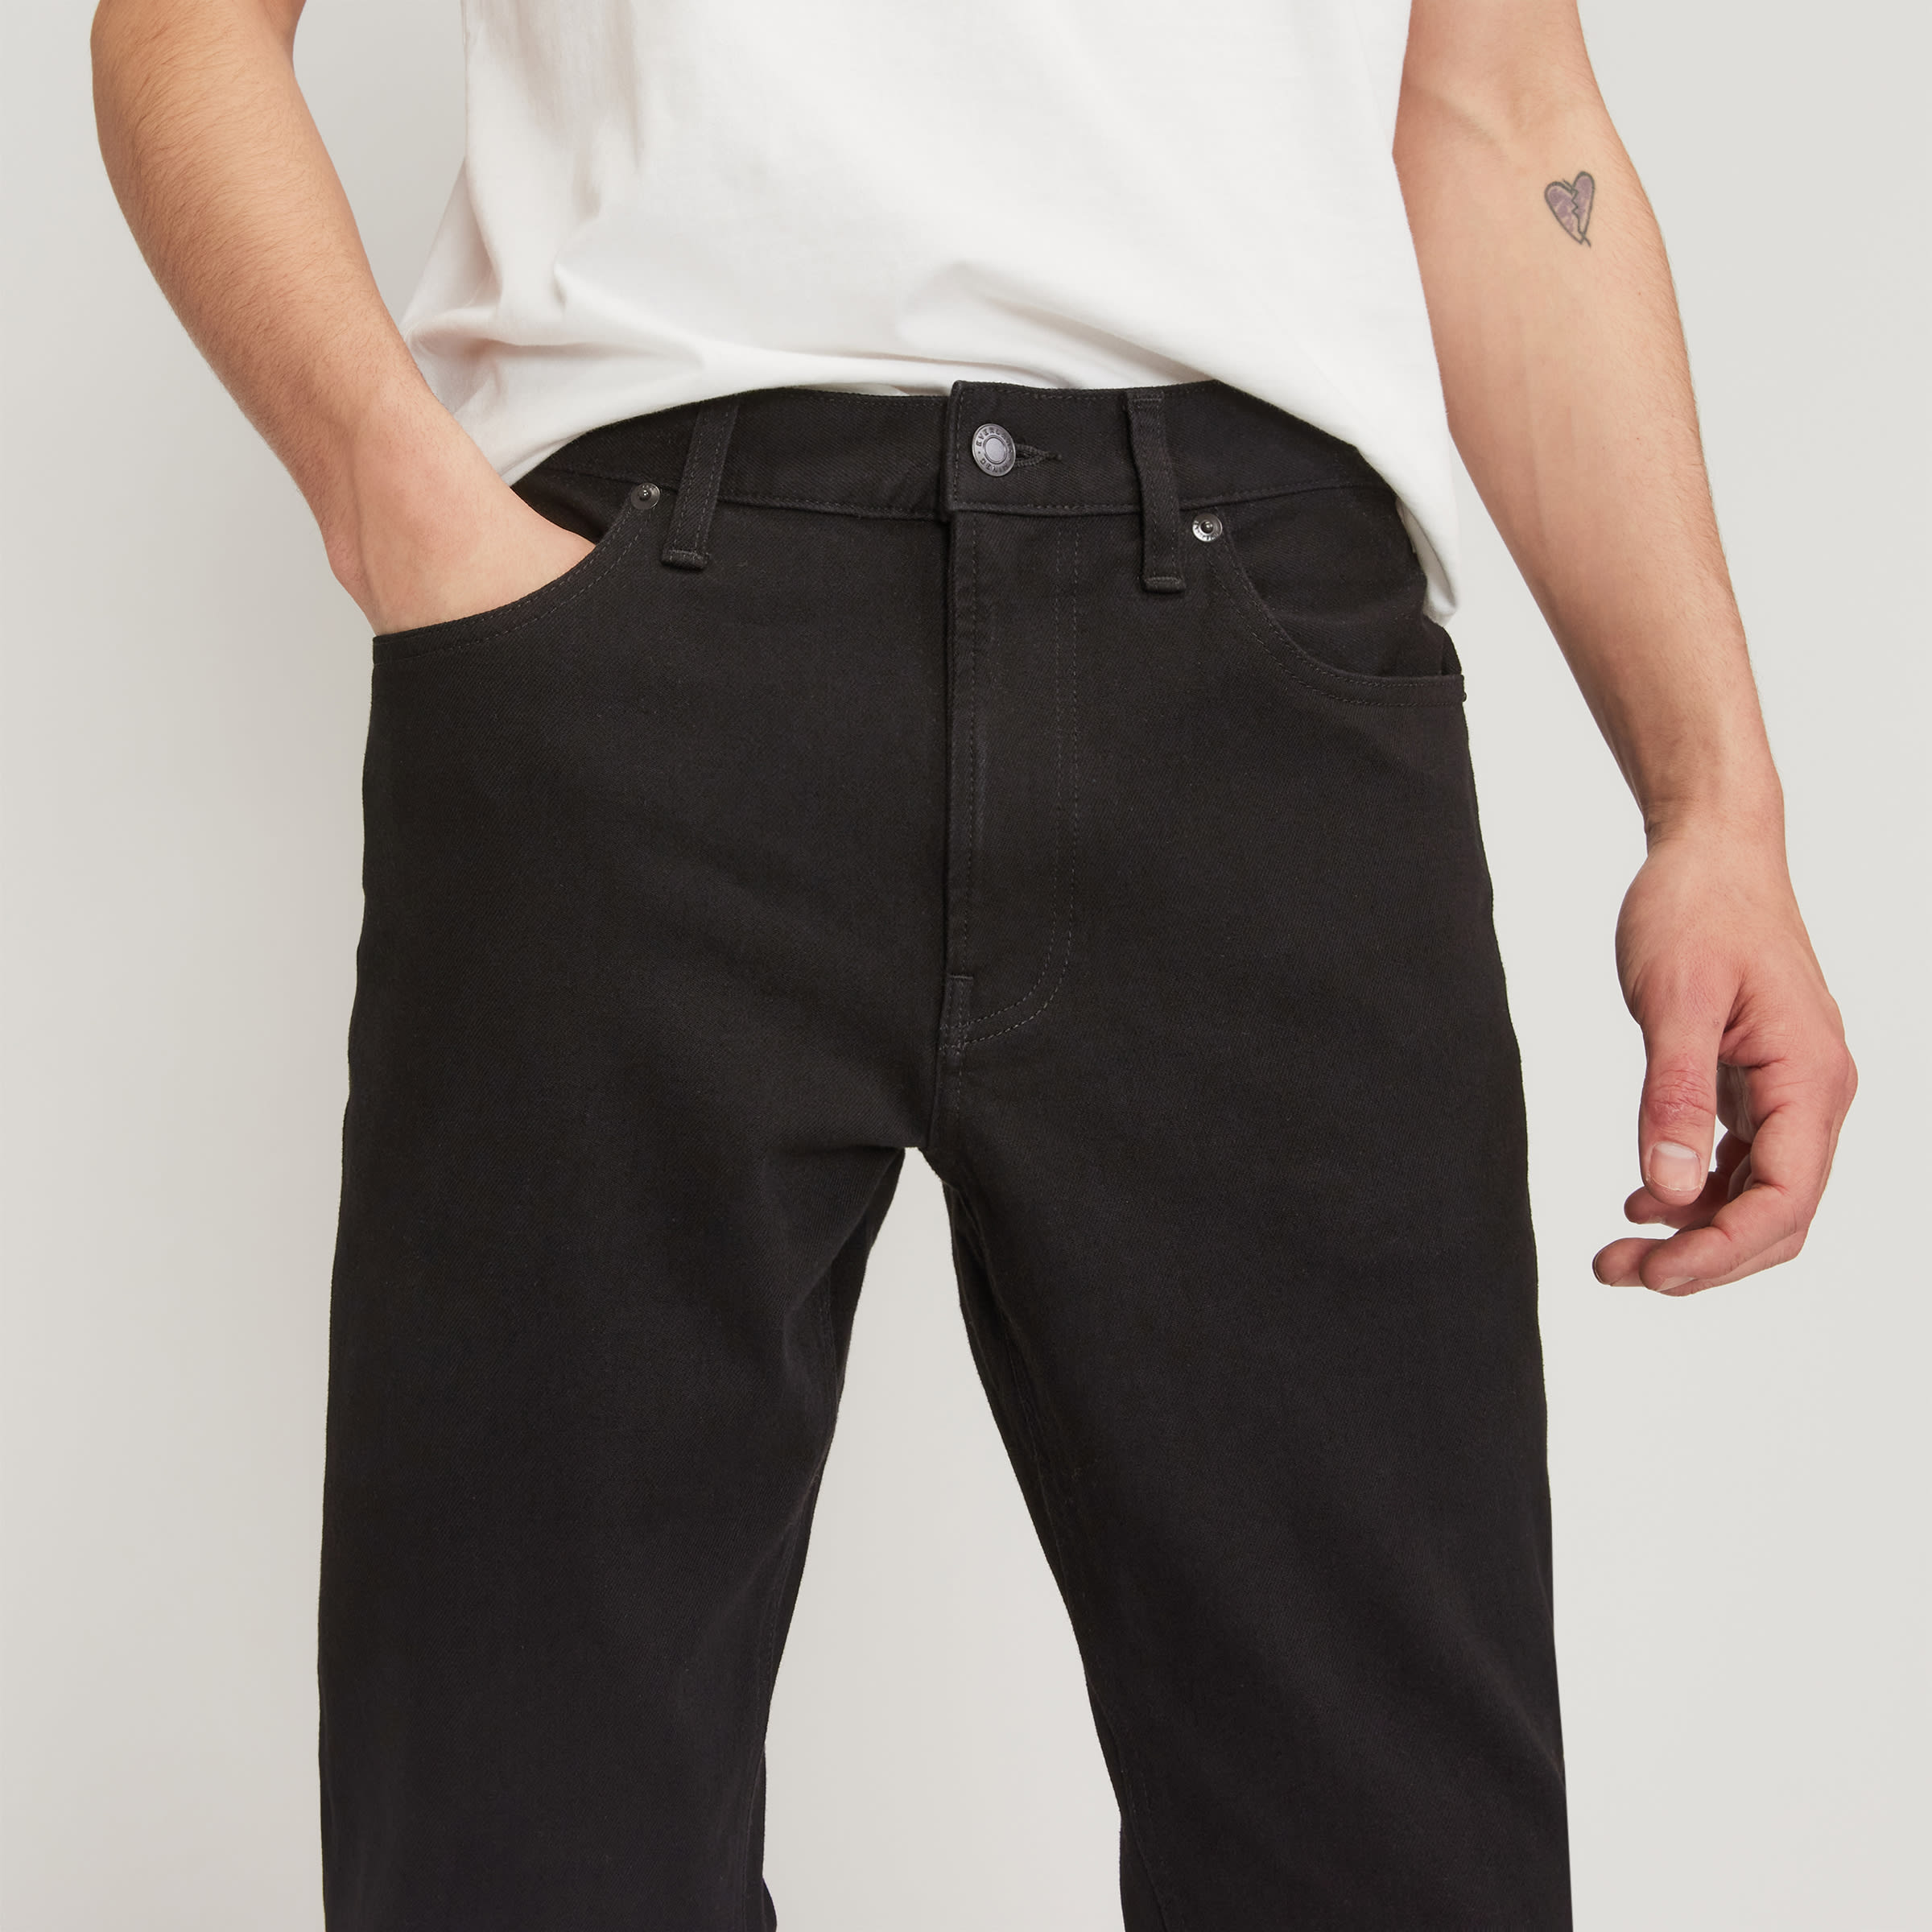 Everlane Men's Organic Cotton Slim Fit Jean in Faded Sky Blue, Size 30x30